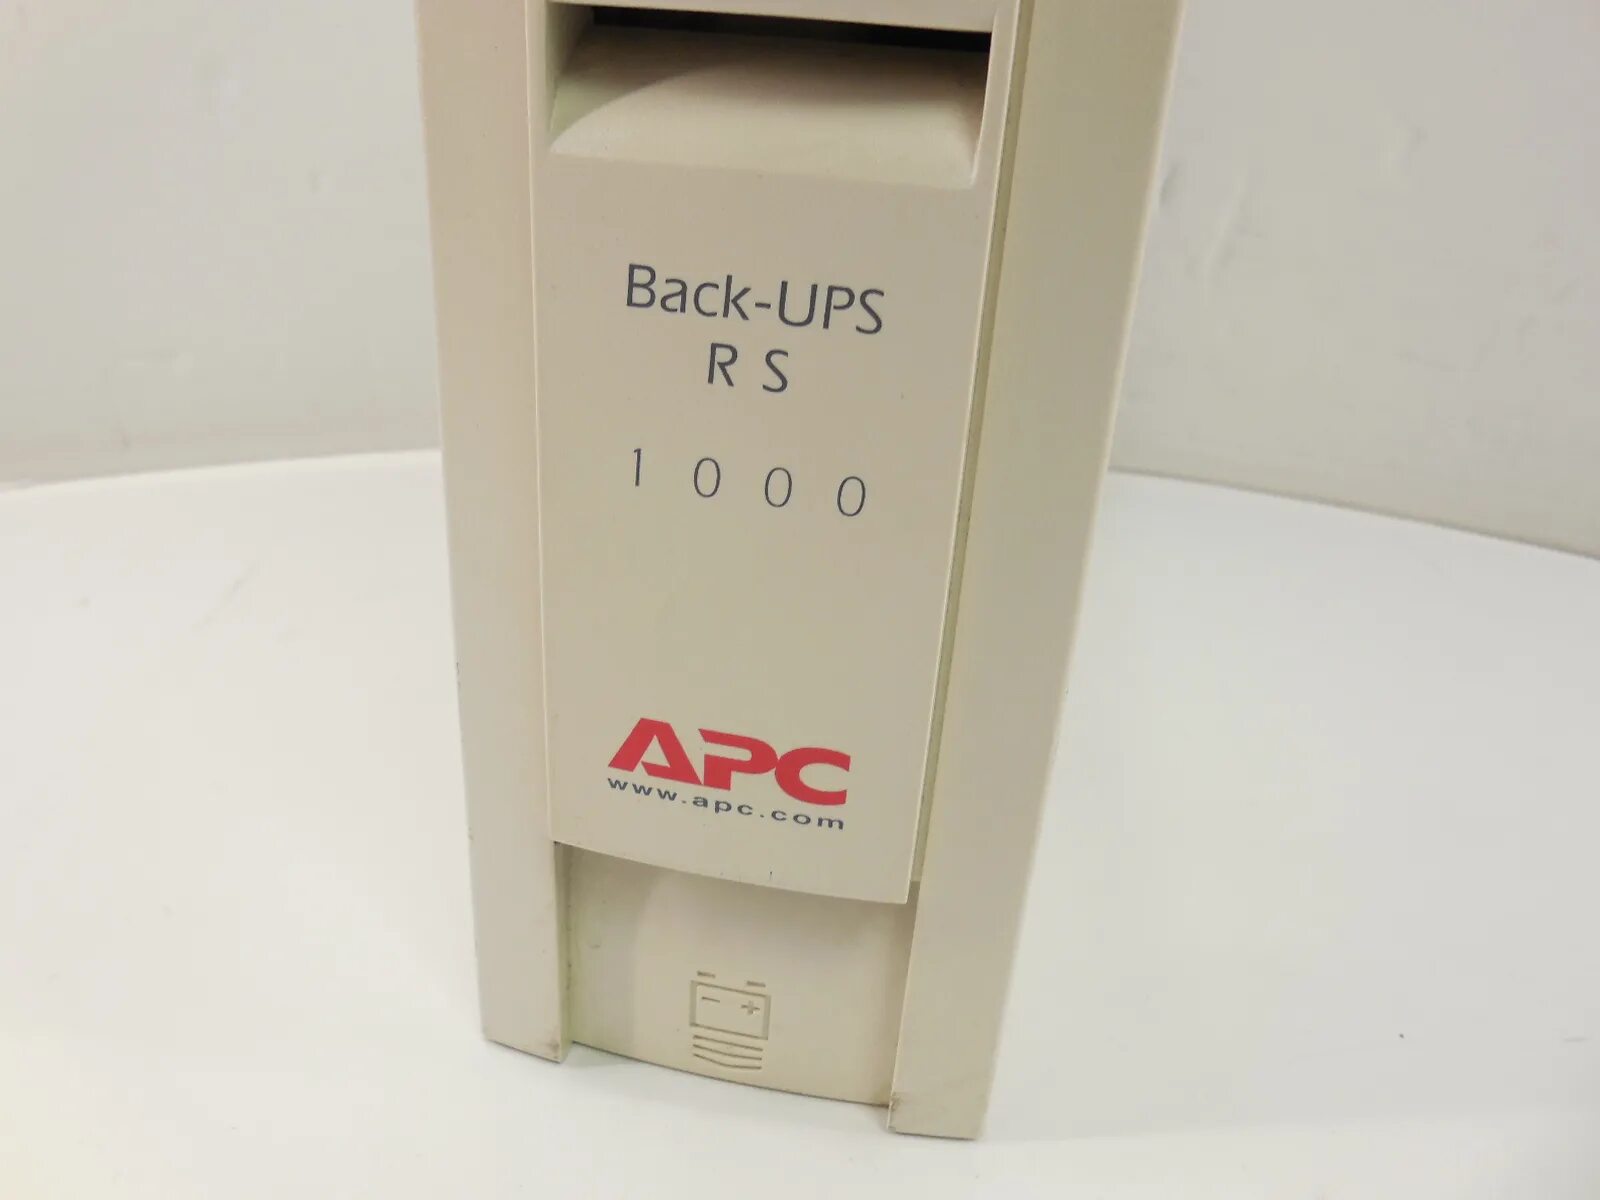 Apc ups 1000 аккумулятор. ИБП APC back-ups RS 1000. Back-ups RS 1000 аккумулятор. APC back-ups RS 1000 br1000i. APC back-ups RS 1000 батареи.